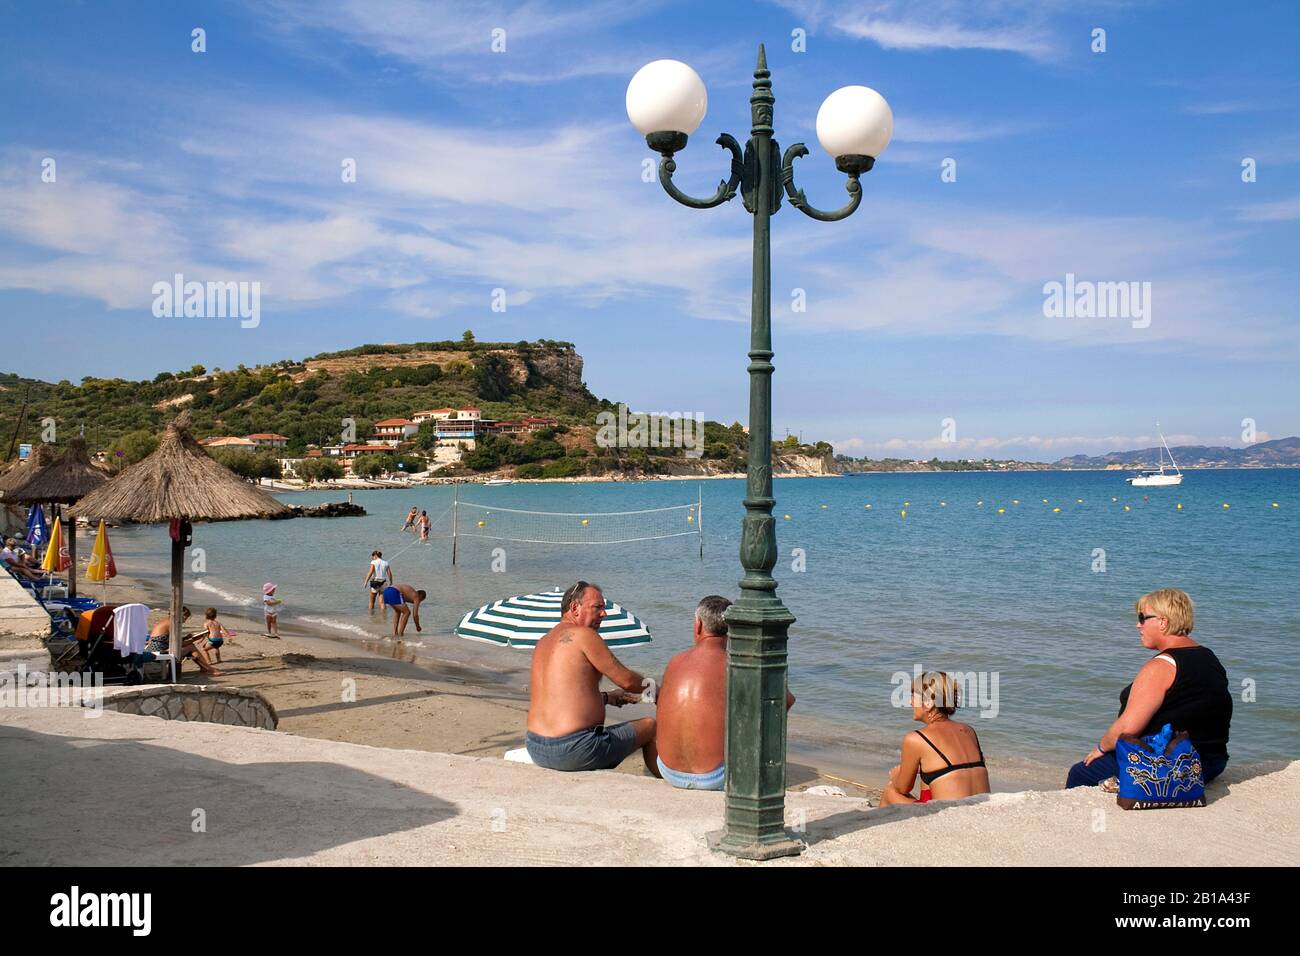 People at the beach of Limni Keriou, Zakynthos island, Greece Stock Photo